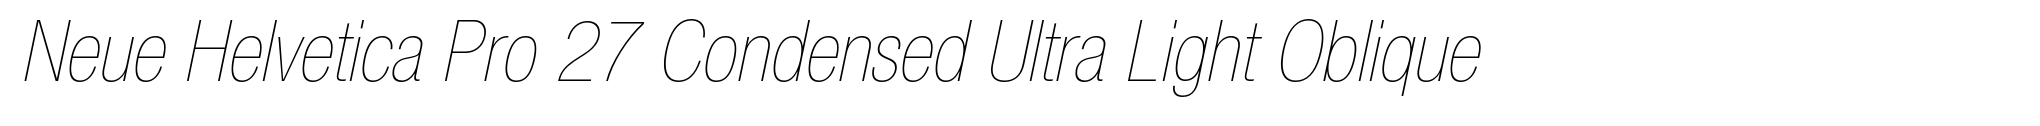 Neue Helvetica Pro 27 Condensed Ultra Light Oblique image